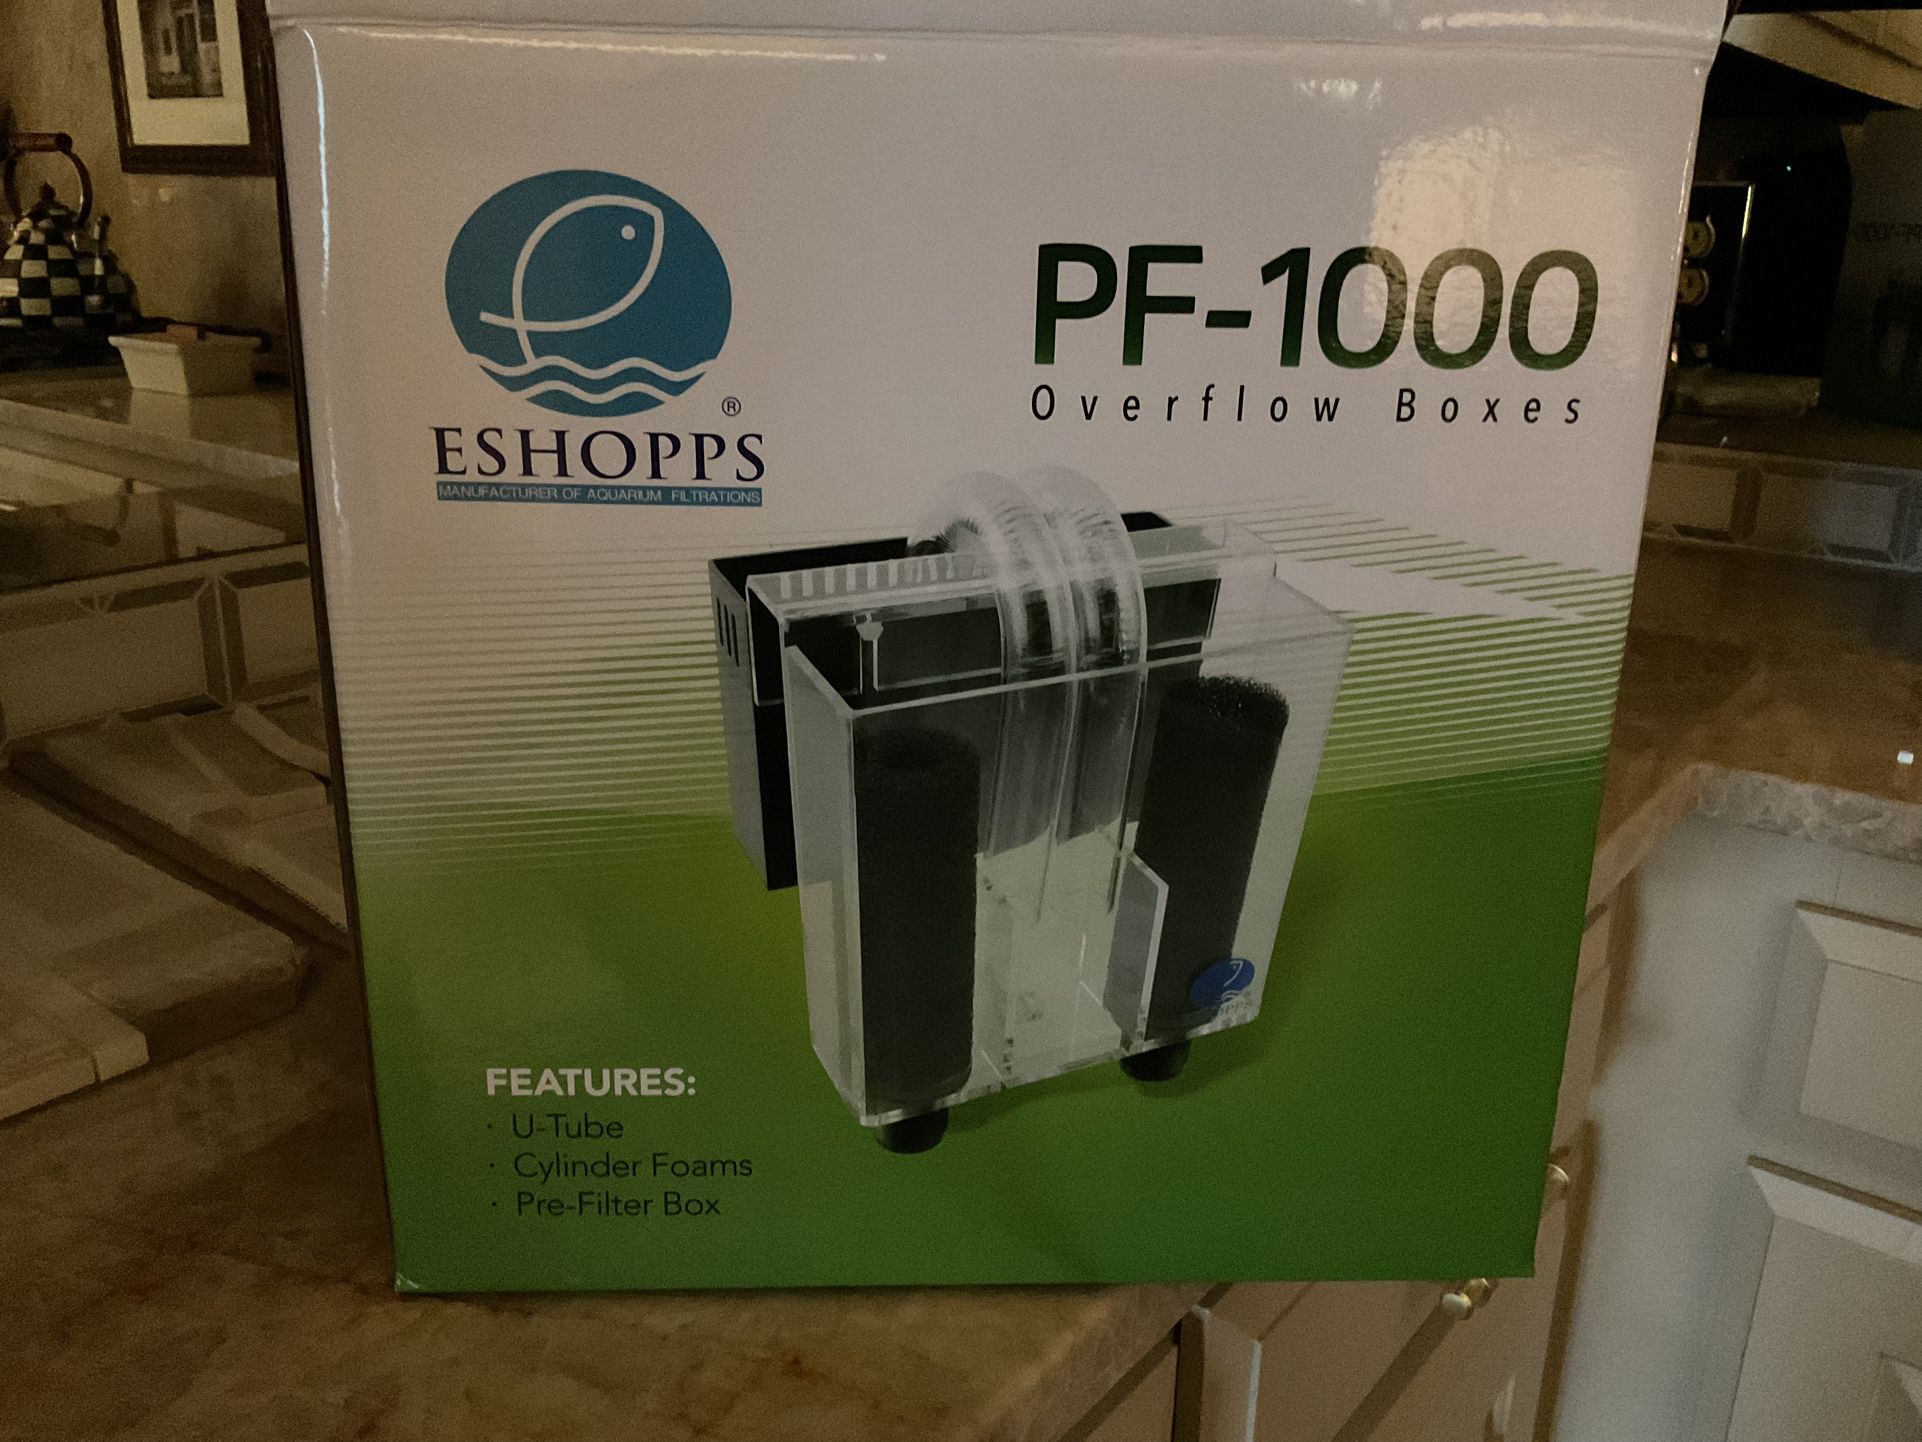 Eshopps PF 1000 OVERFLOW BOX $100.00 Or Best Offer